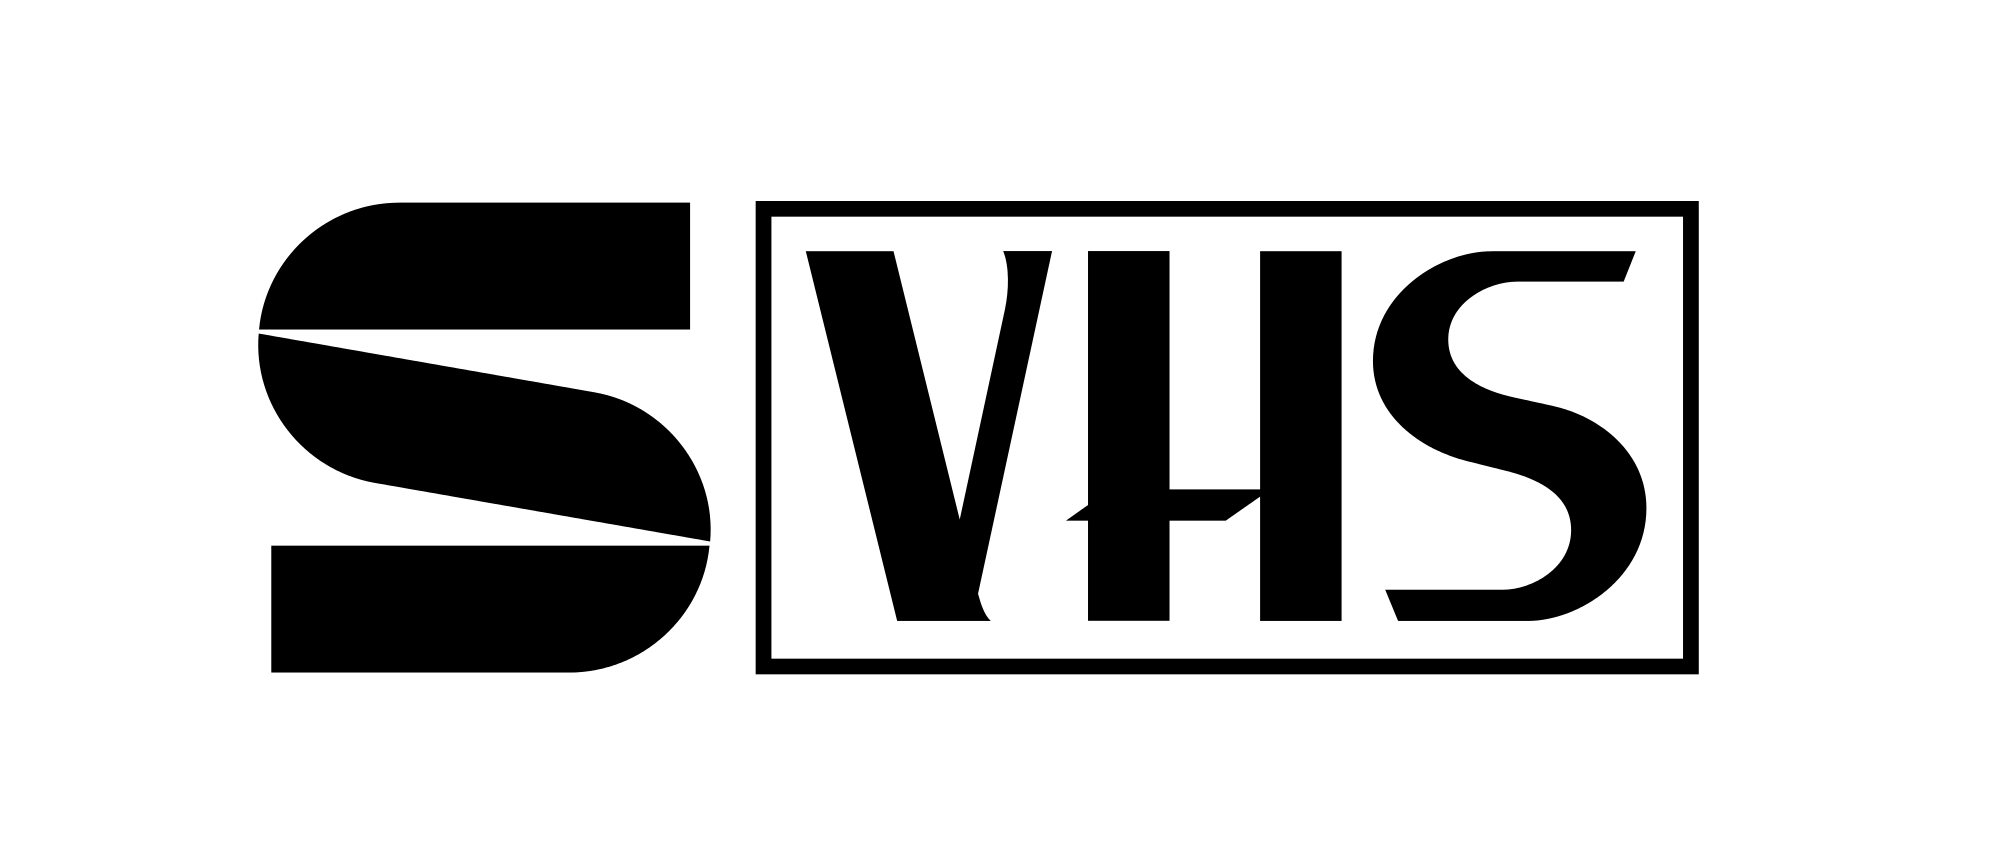 VHS Logo - S VHS Logo.svg